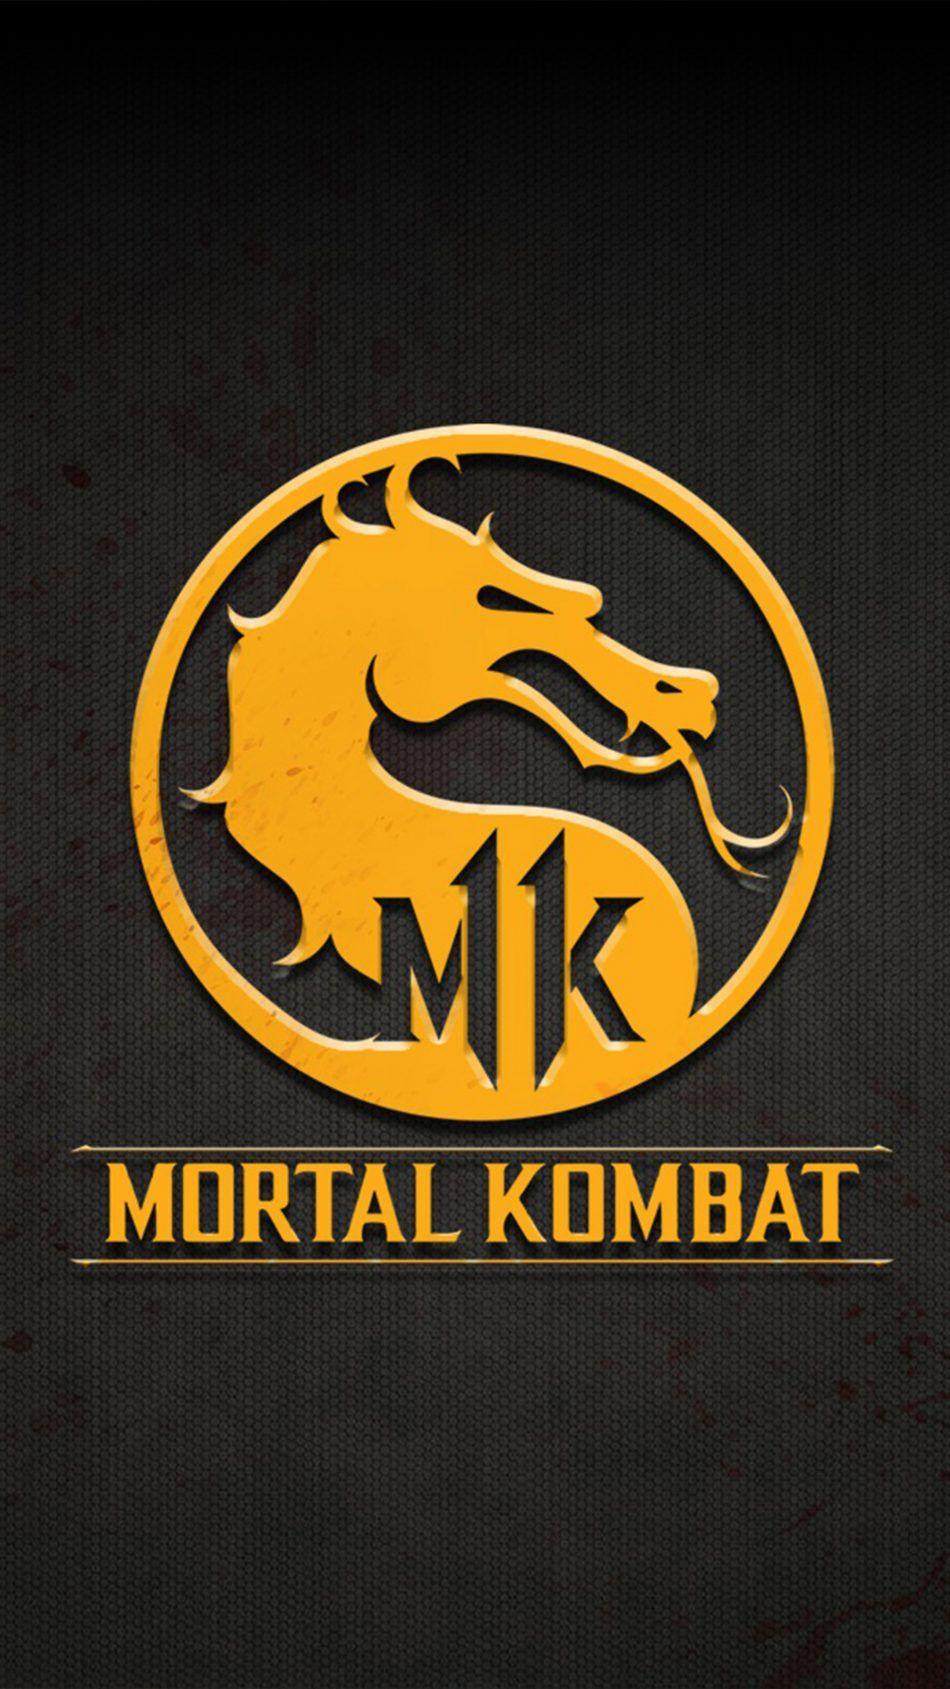 Mortal Kombat 11 Logo 4K Ultra HD Mobile Wallpaper. Mortal kombat art, Mortal kombat video game, Scorpion mortal kombat